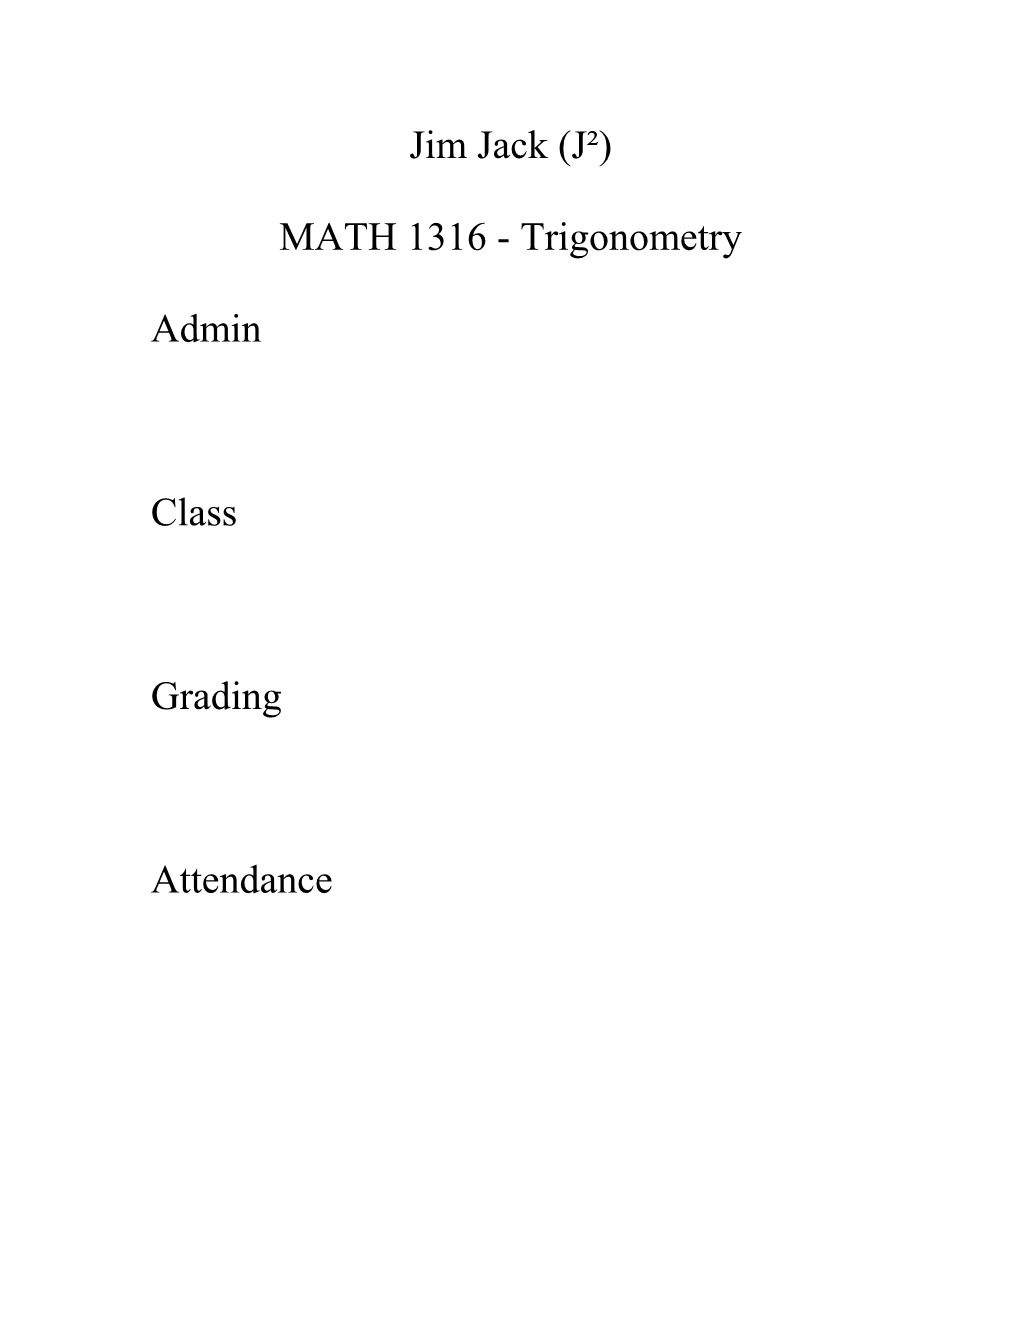 MATH 1316 - Trigonometry